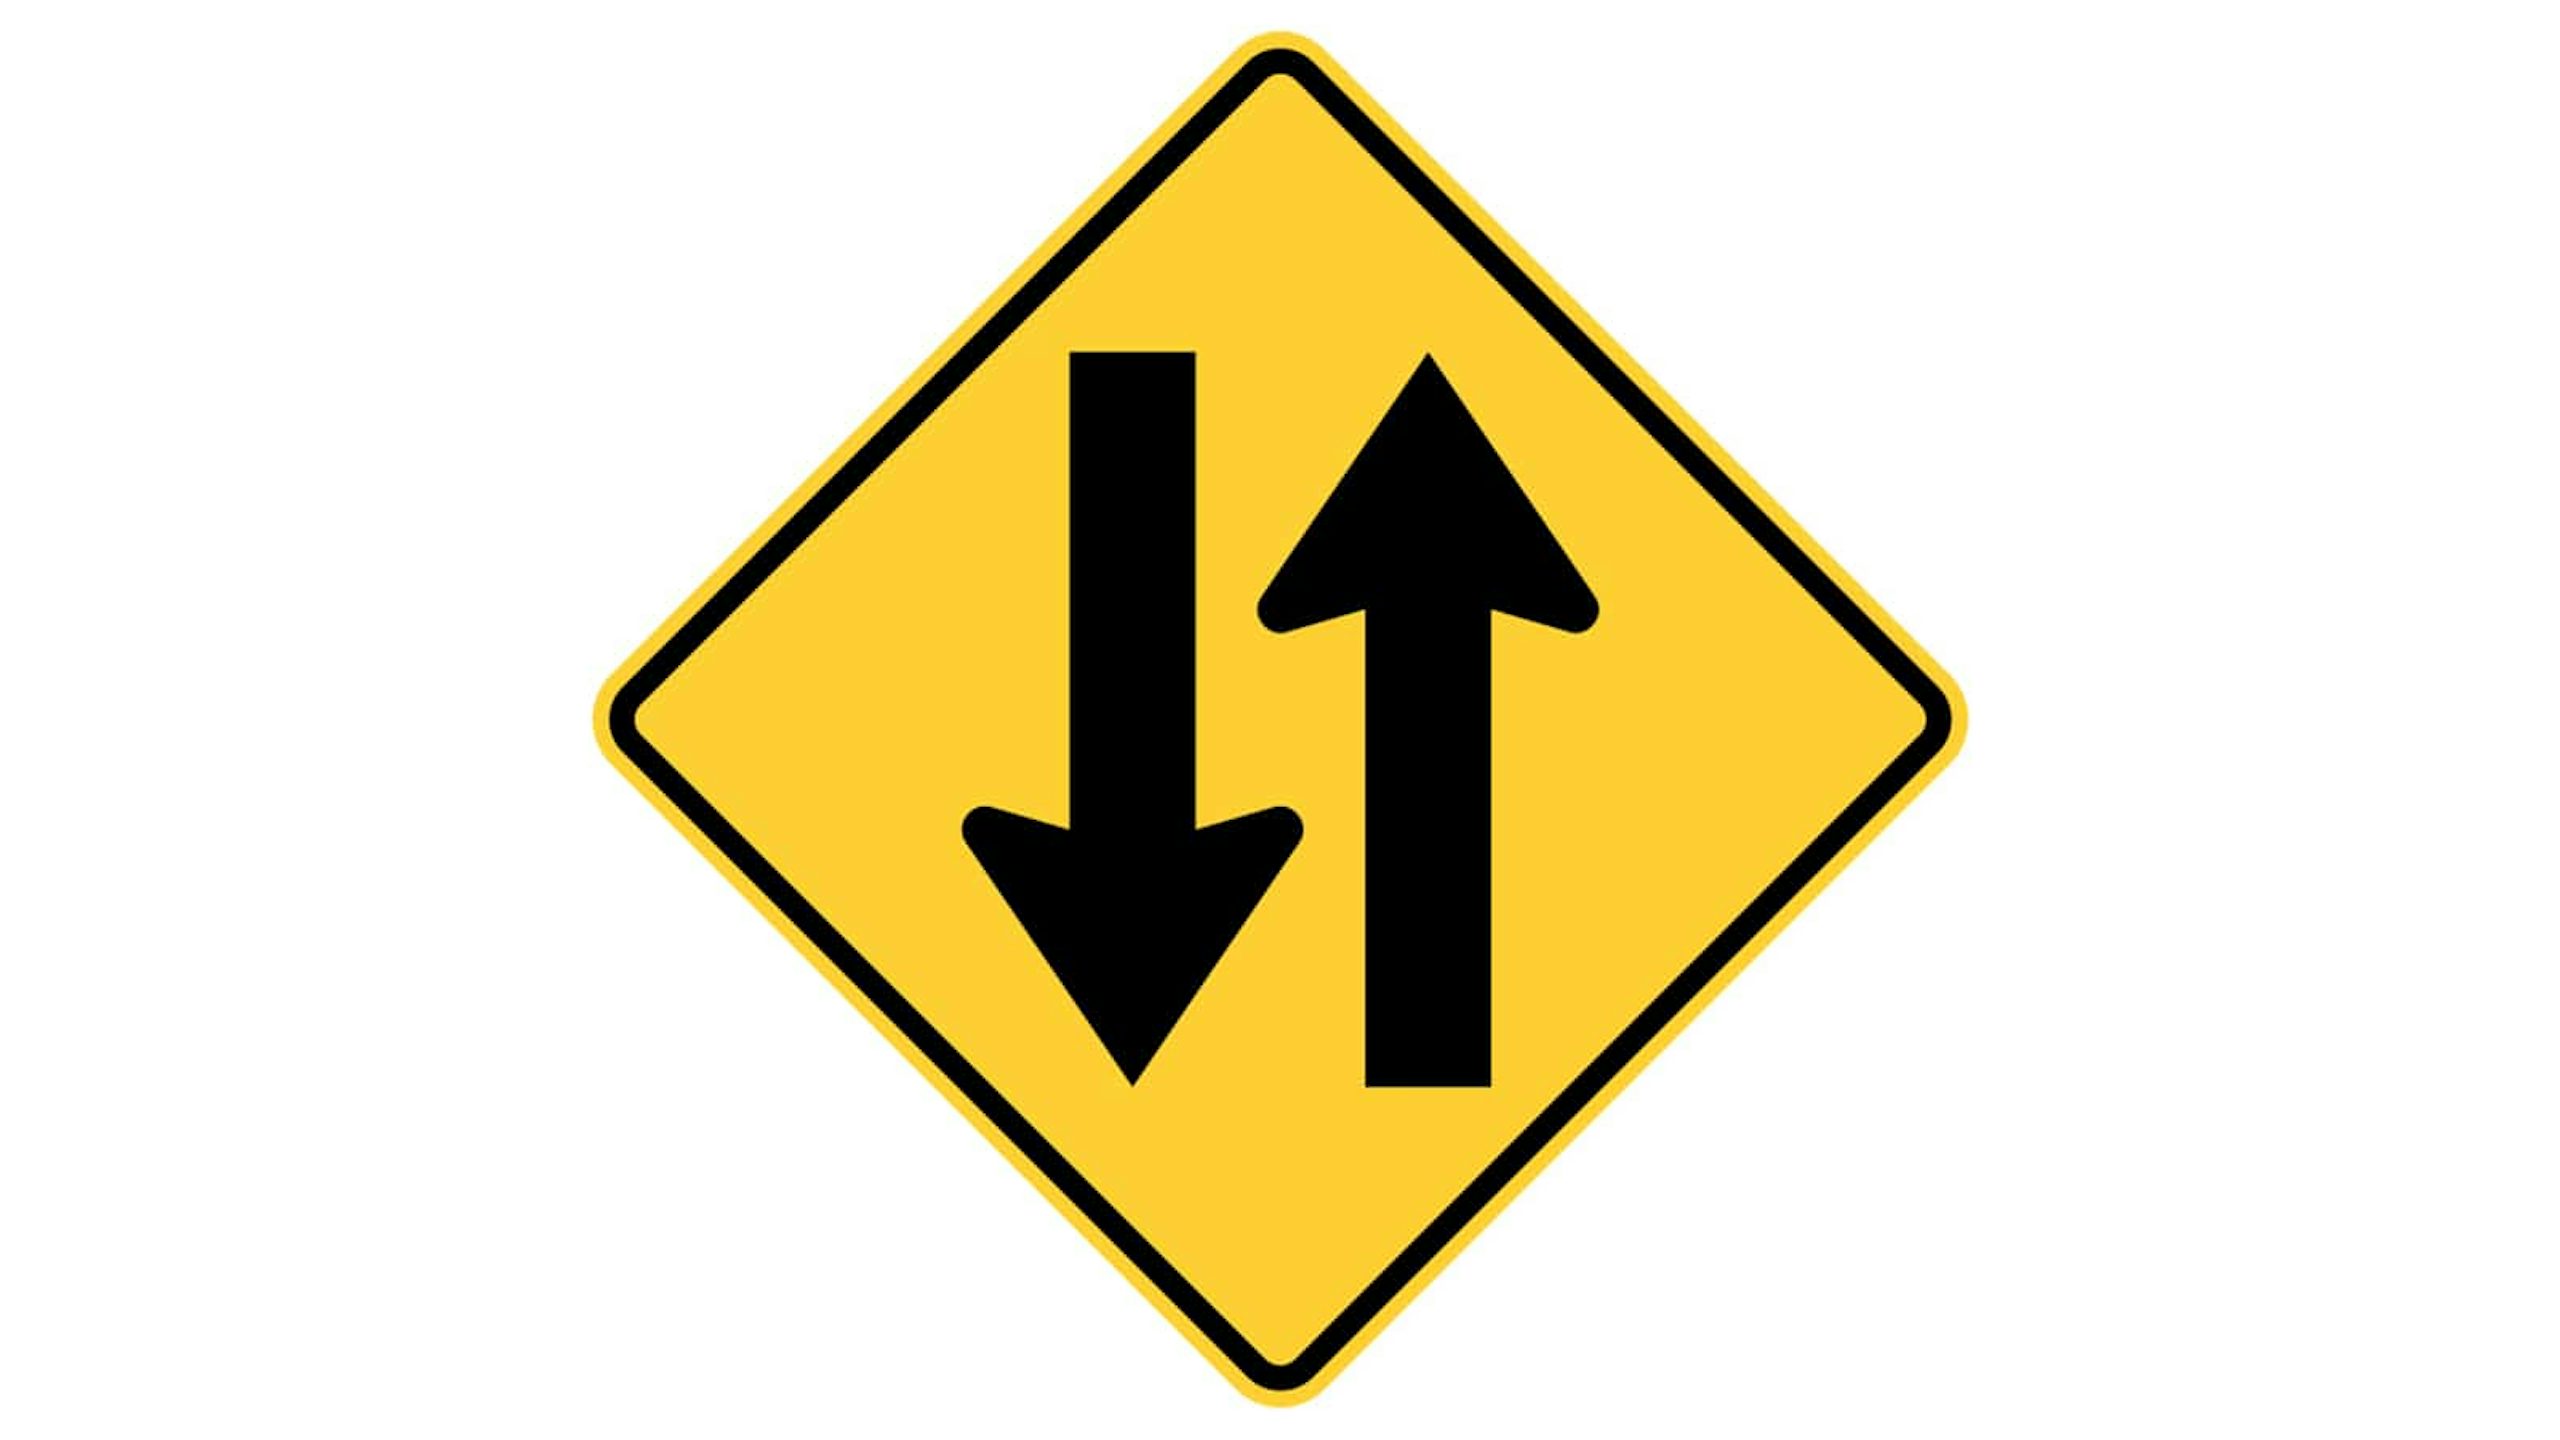 Warning sign Two-Way Traffic